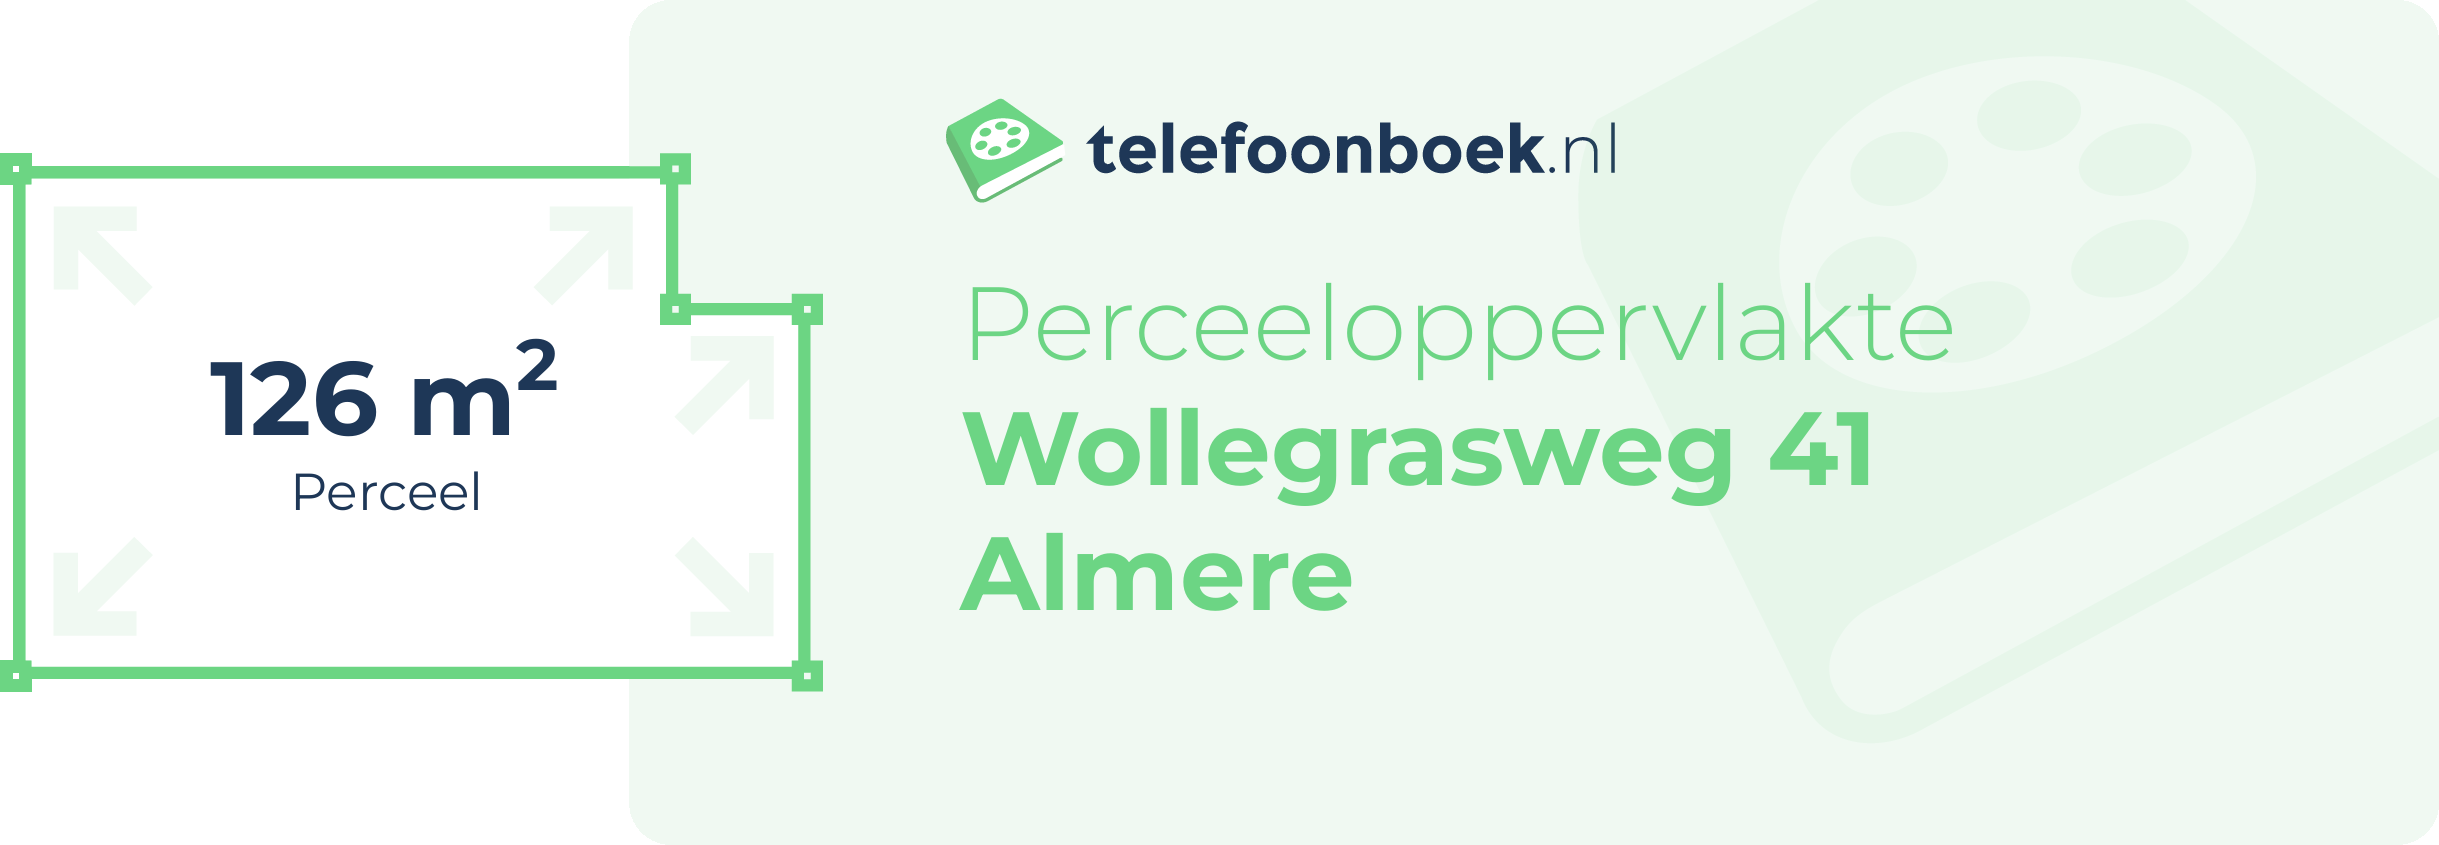 Perceeloppervlakte Wollegrasweg 41 Almere